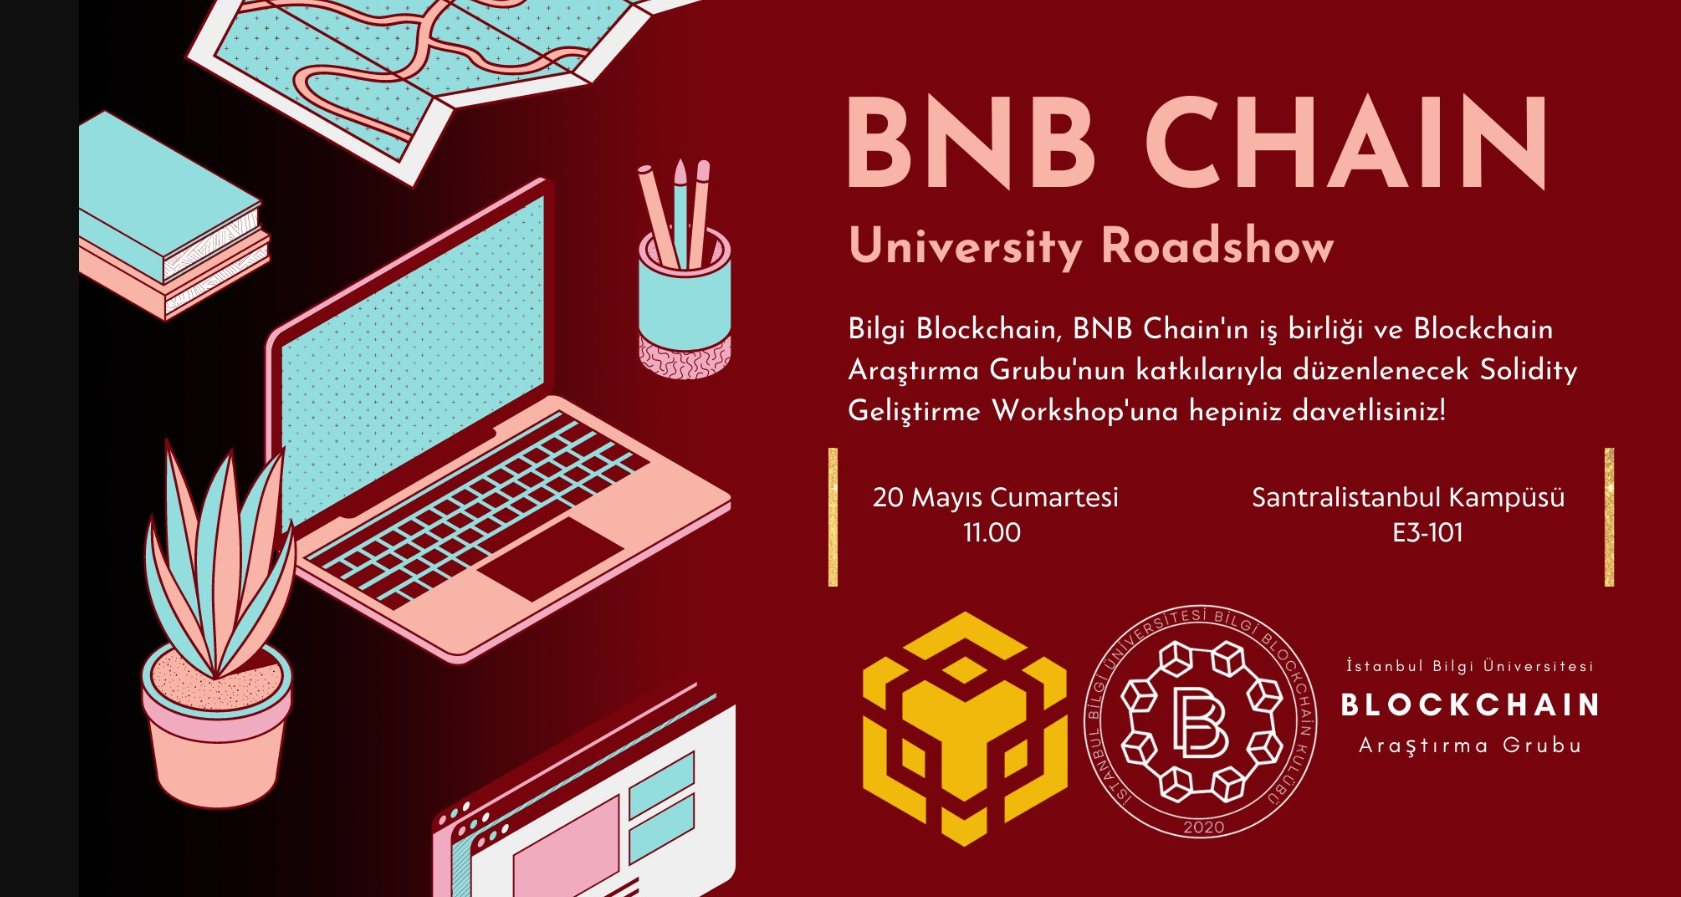 BNB CHAIN University Roadshow # Bilgi Universitesi